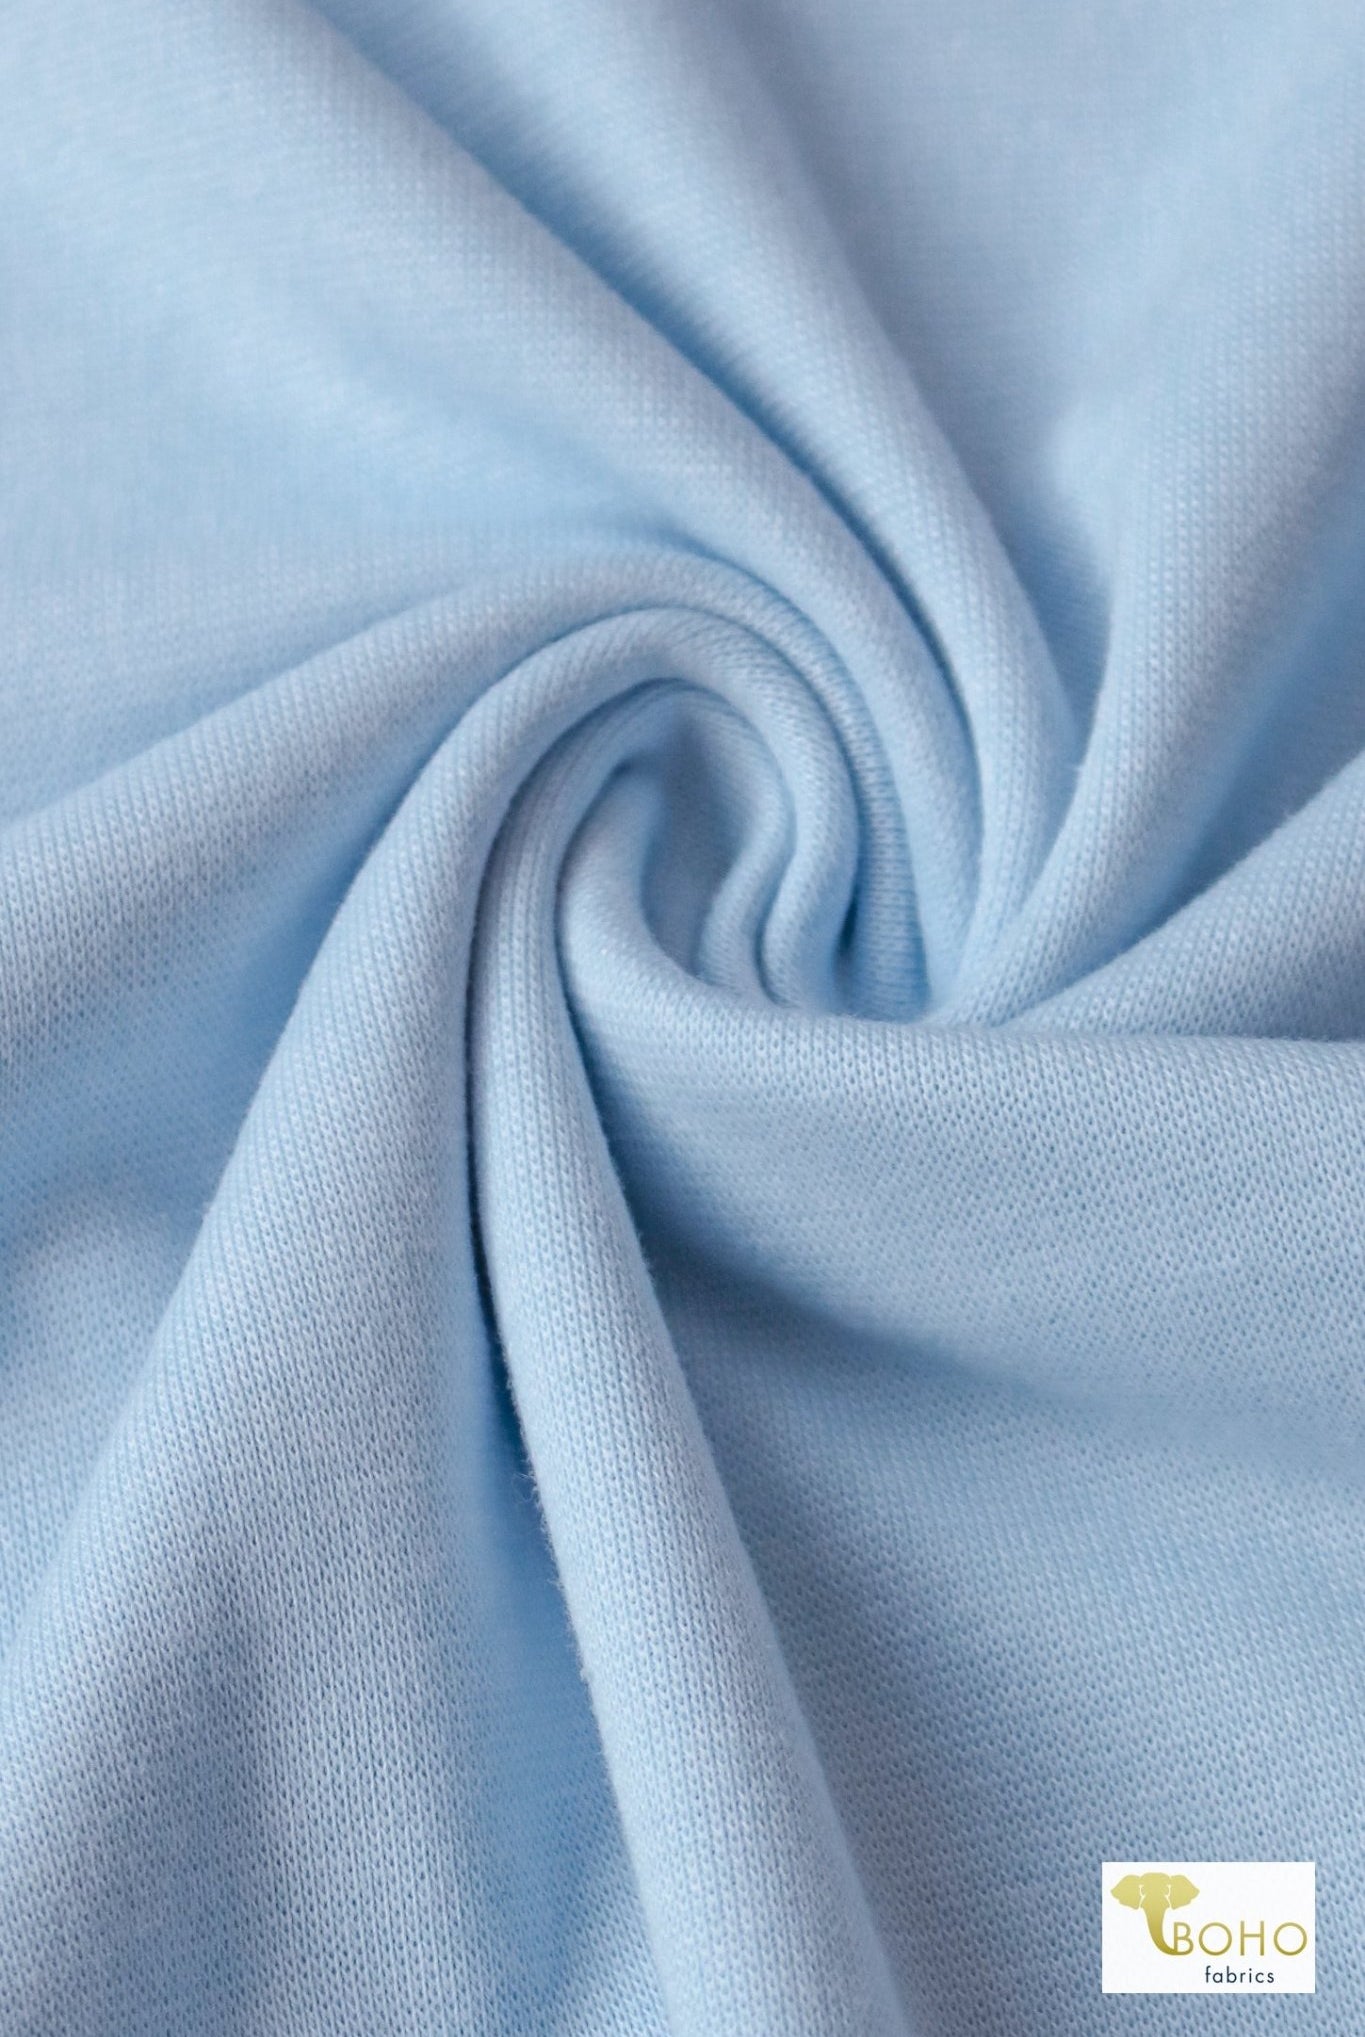 1x1 Rib Knit, Light Baby Blue. SOLD BY THE HALF YARD! - Boho Fabrics